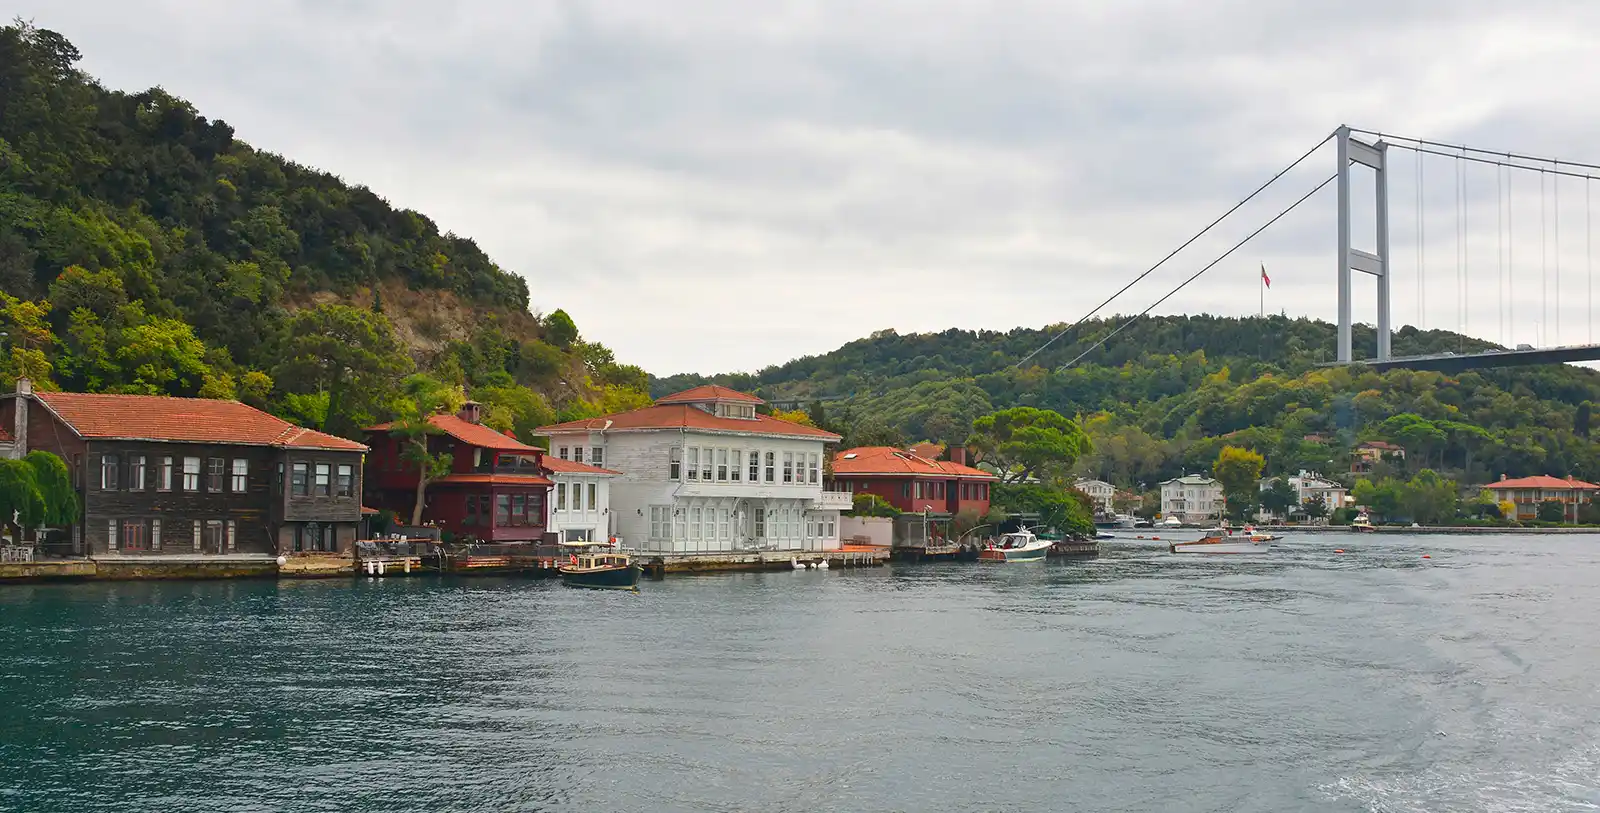 FSM bridge from Beykoz, a property investment hub in Istanbul, Turkey